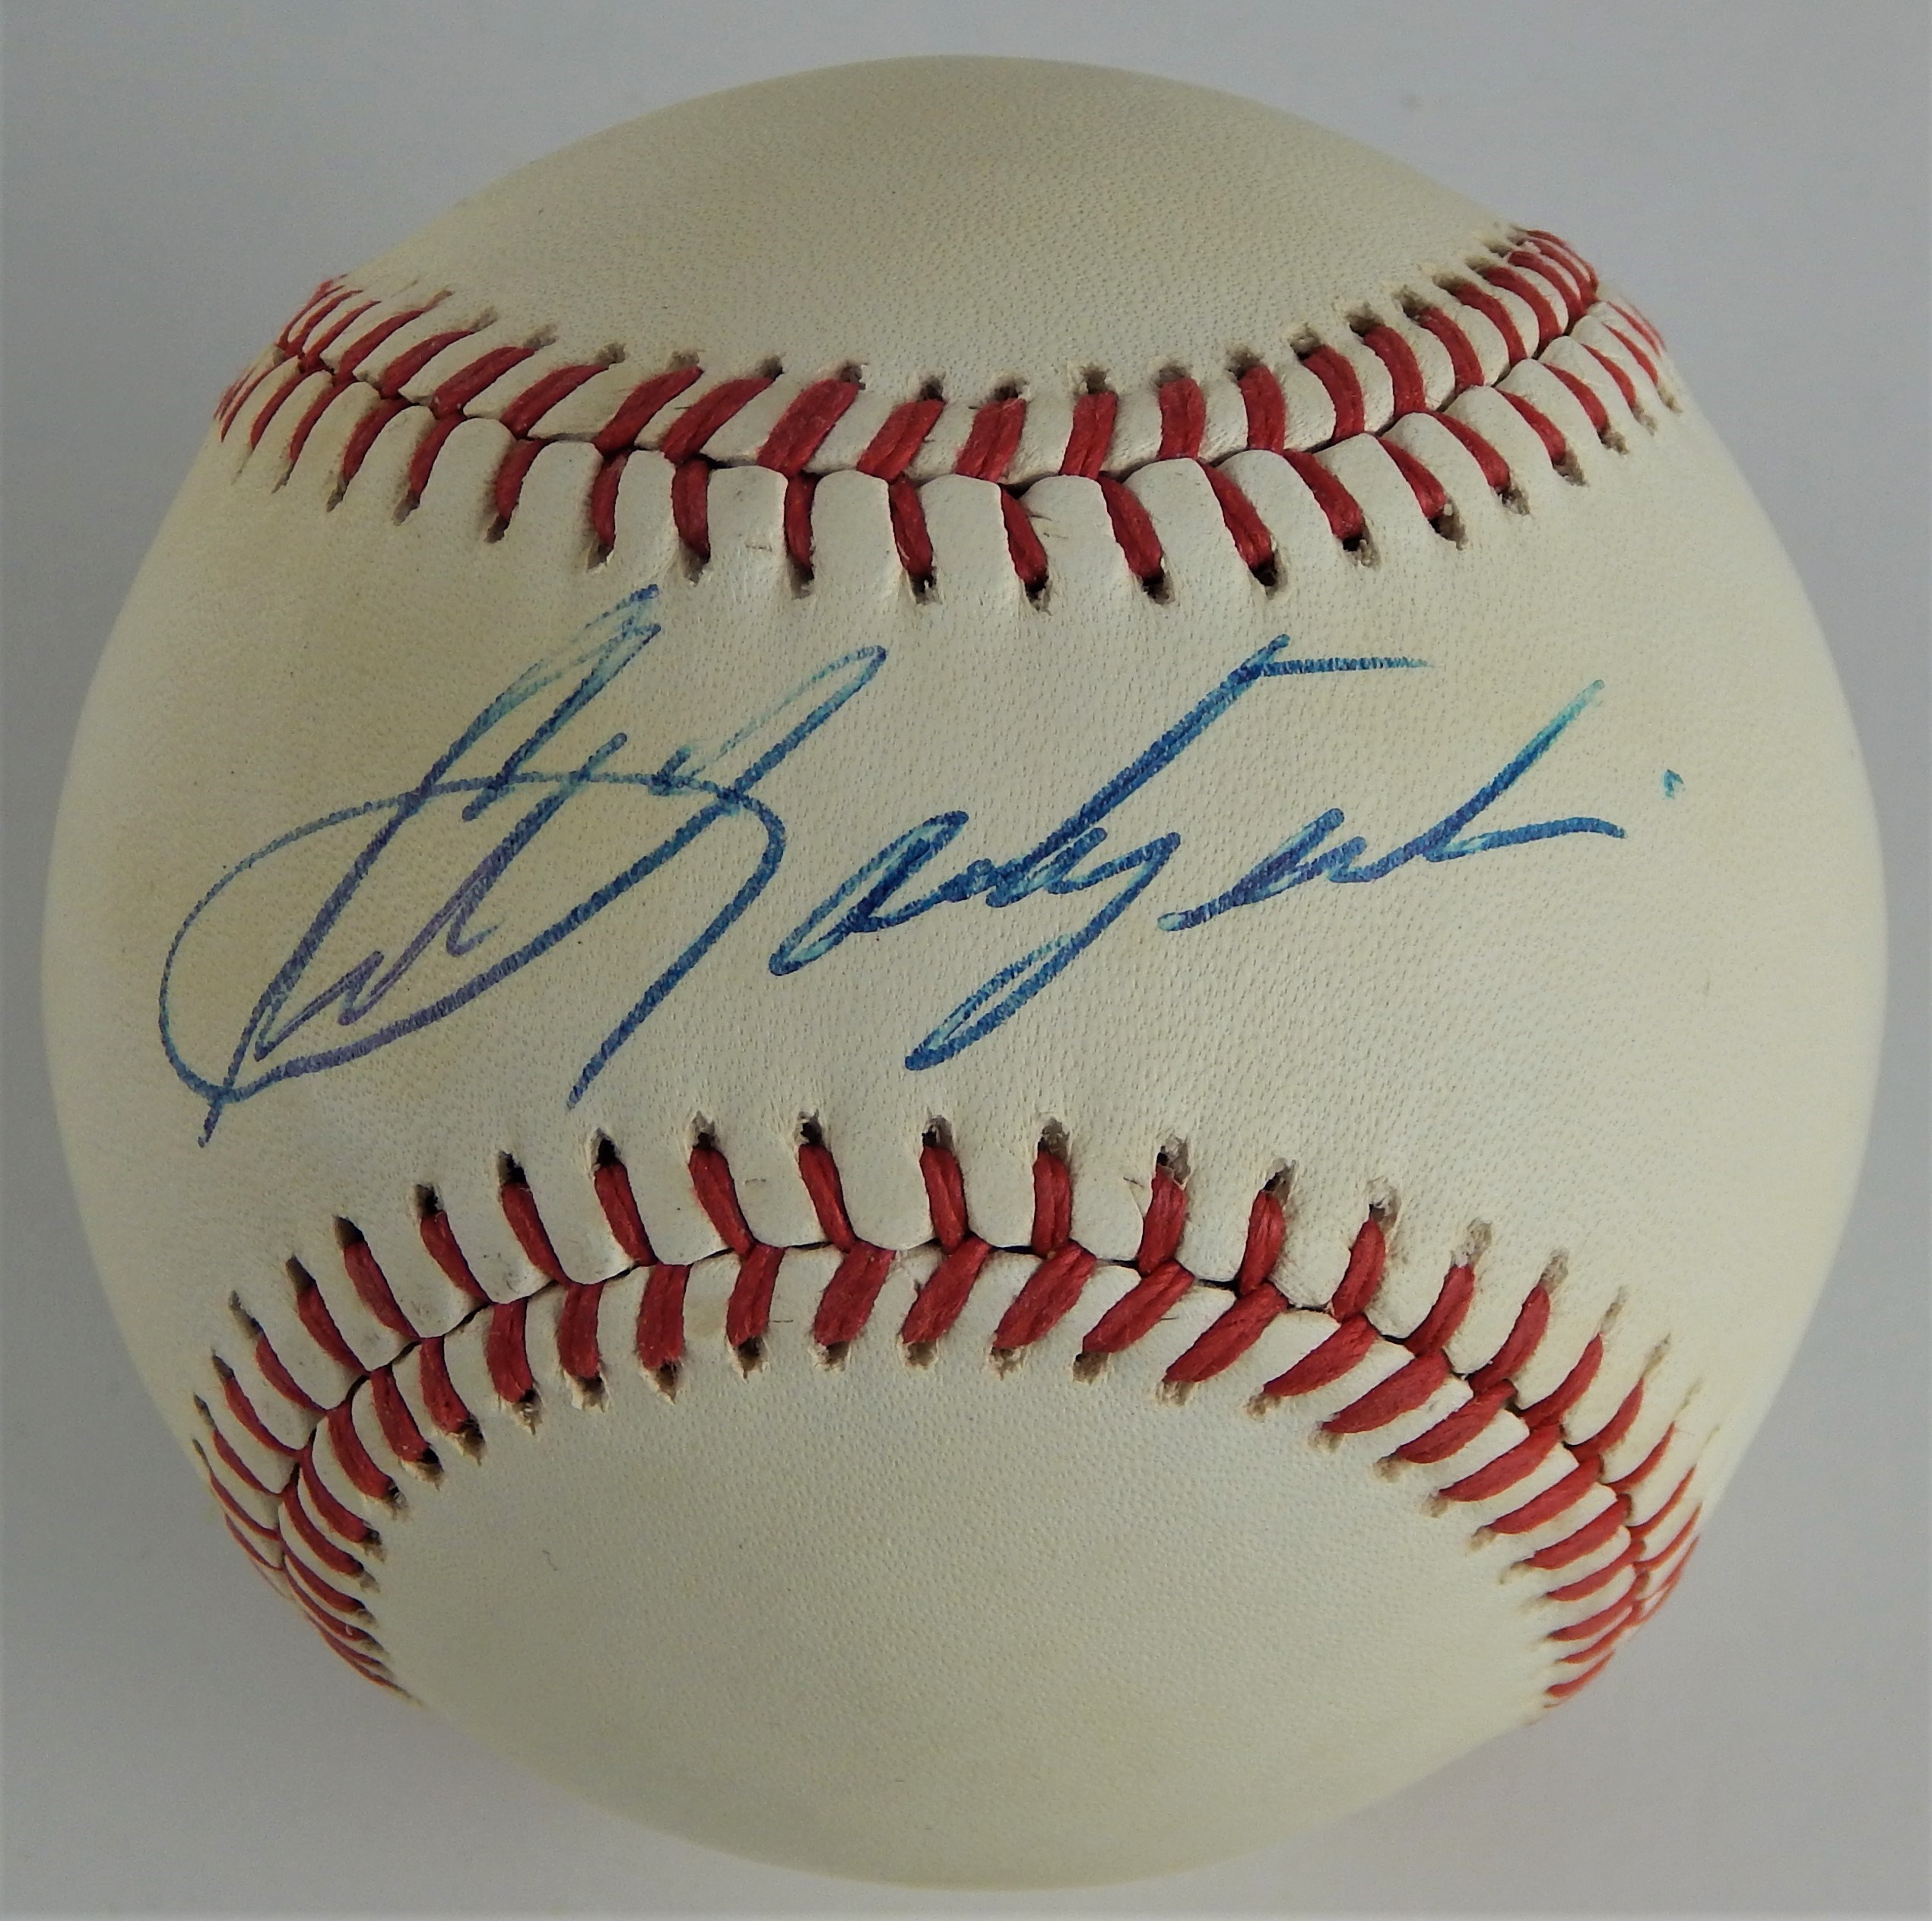 Baseball Autographs - Carl Yastrzemski Single Signed OAL Baseball